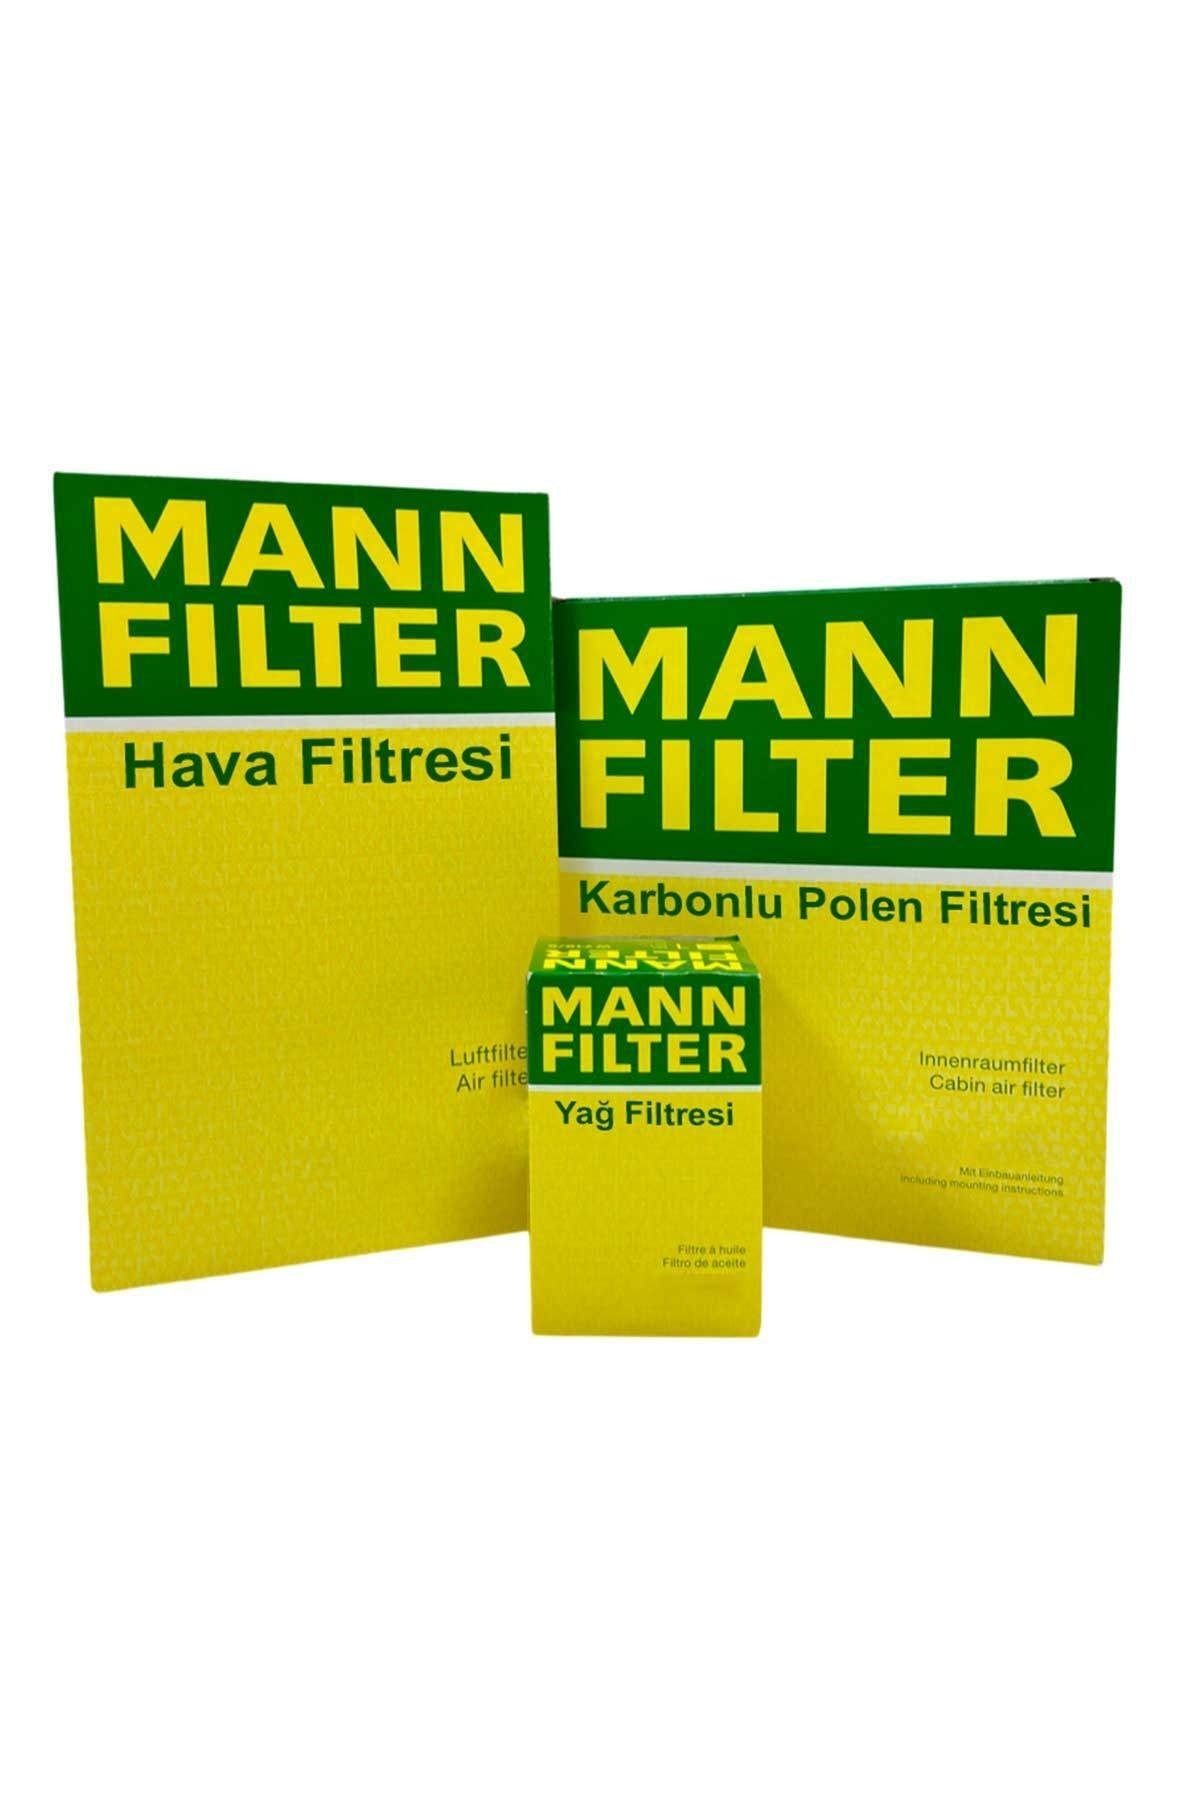 Mann Filter Uzmanparça Vw Bora 1.6 16v Benzinli Mann Filtre Bakım Seti 2000-2006 | Hava+yağ+karbonlu Polen